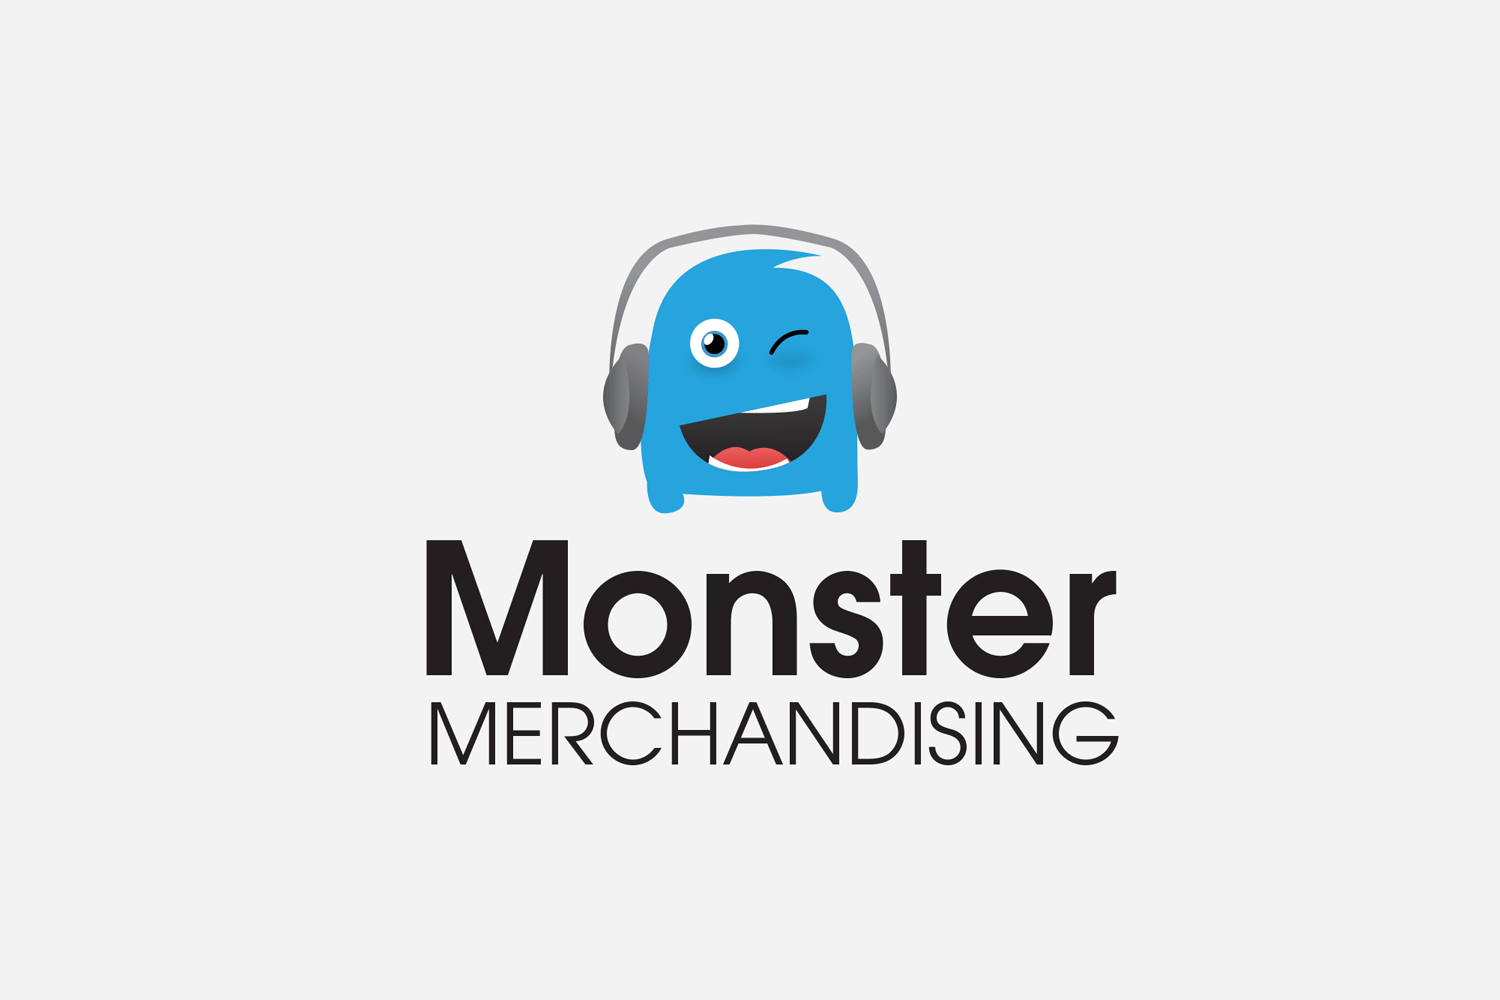 Merchandising Logo - Monster Merchandising, Brand Logo | Nugget Design